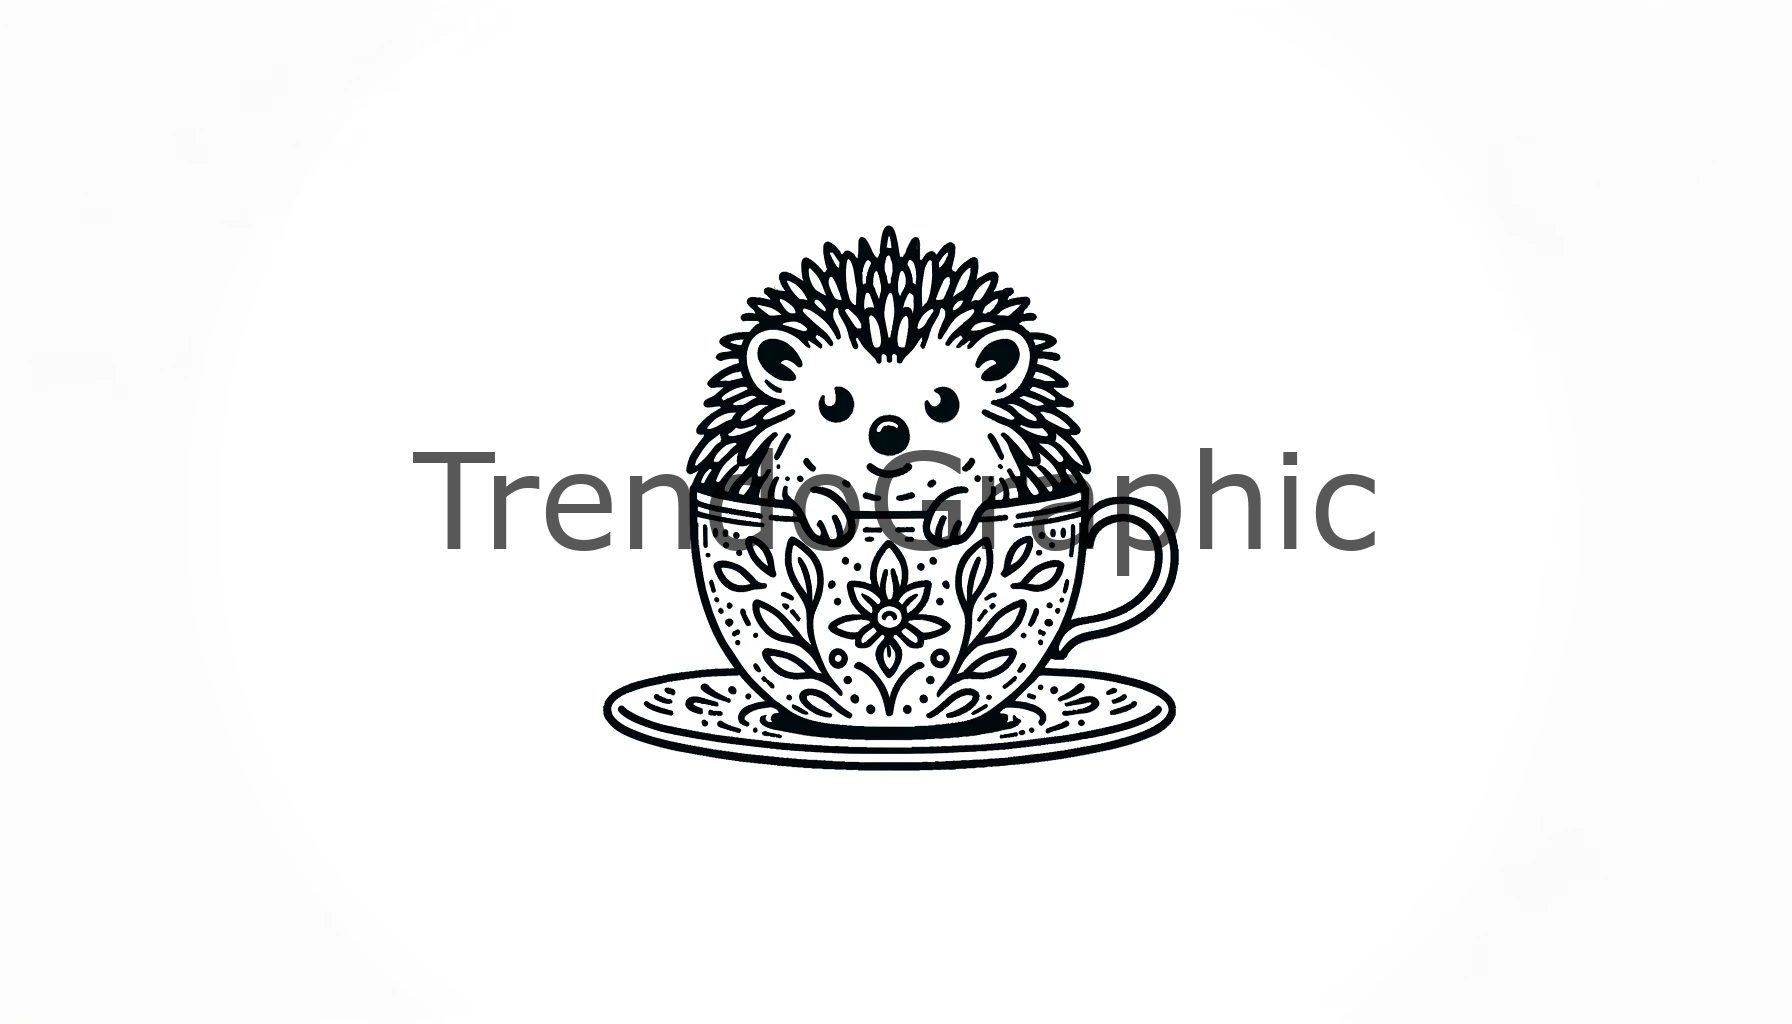 Charming Hedgehog in a Teacup: A Unique Line Art Display